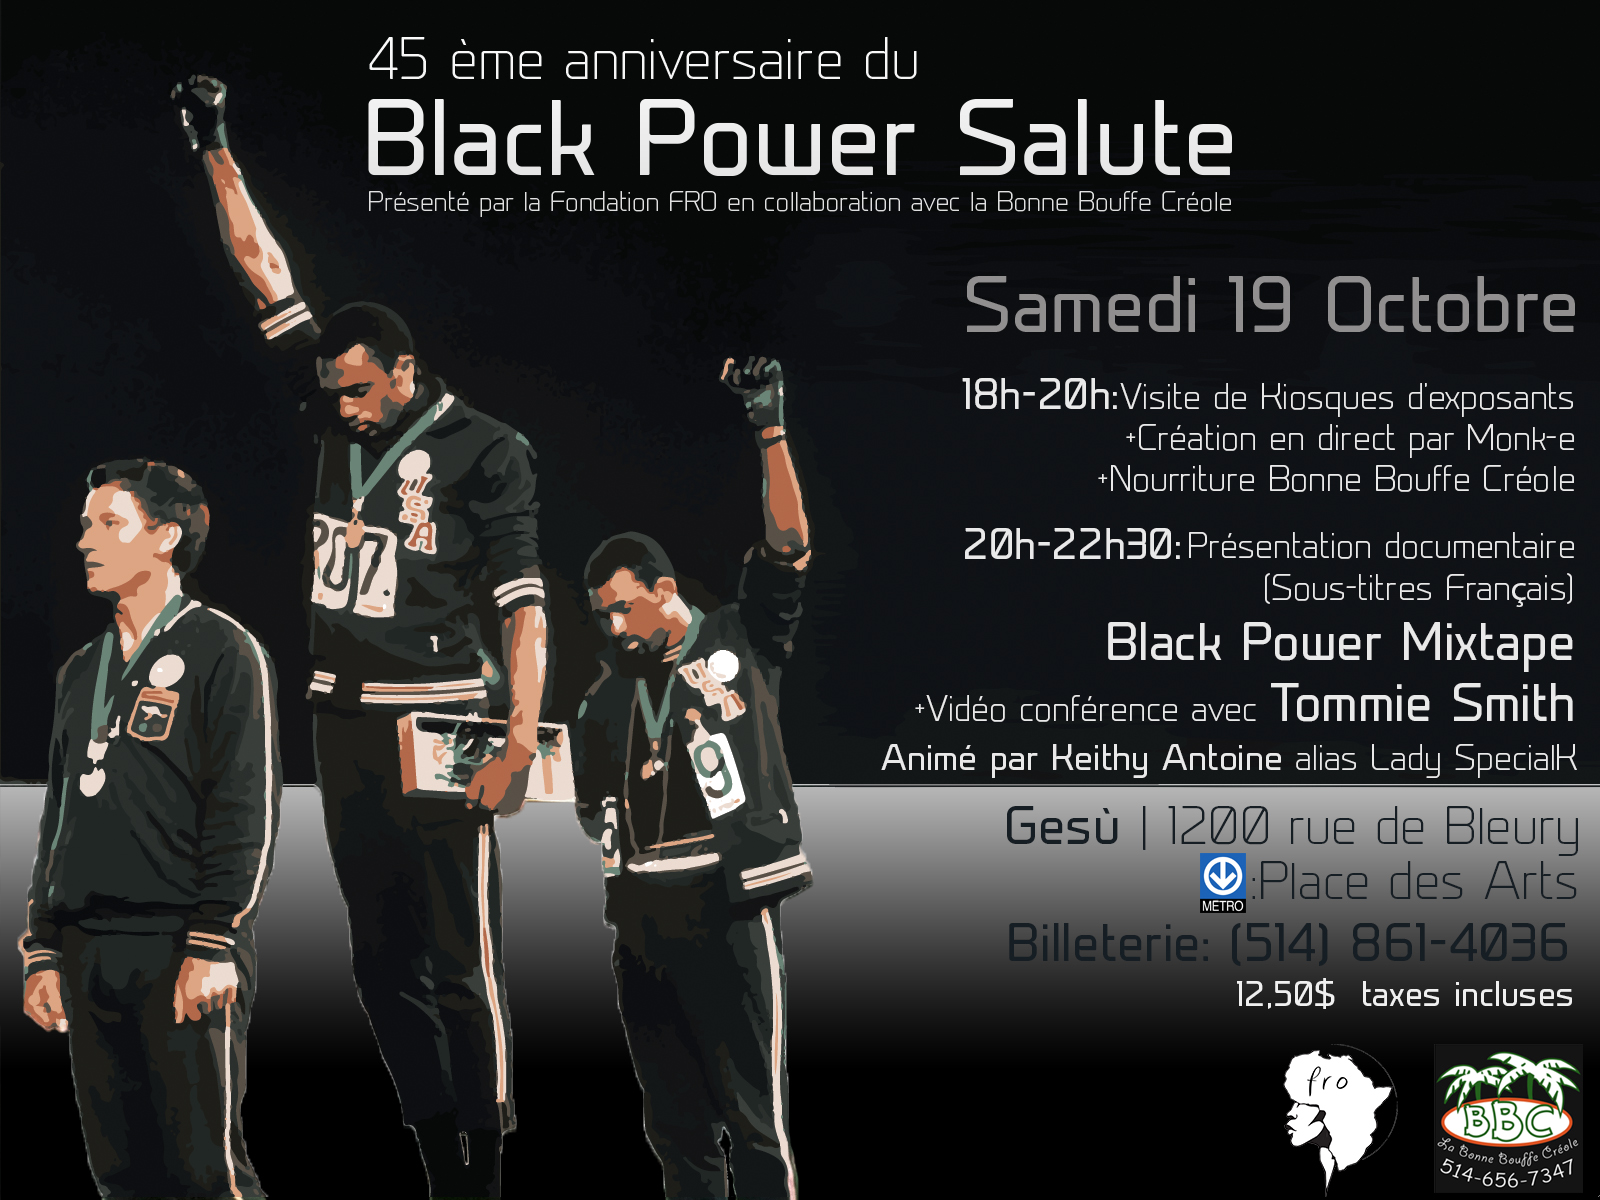 Black Power Wallpaper Of The Salute